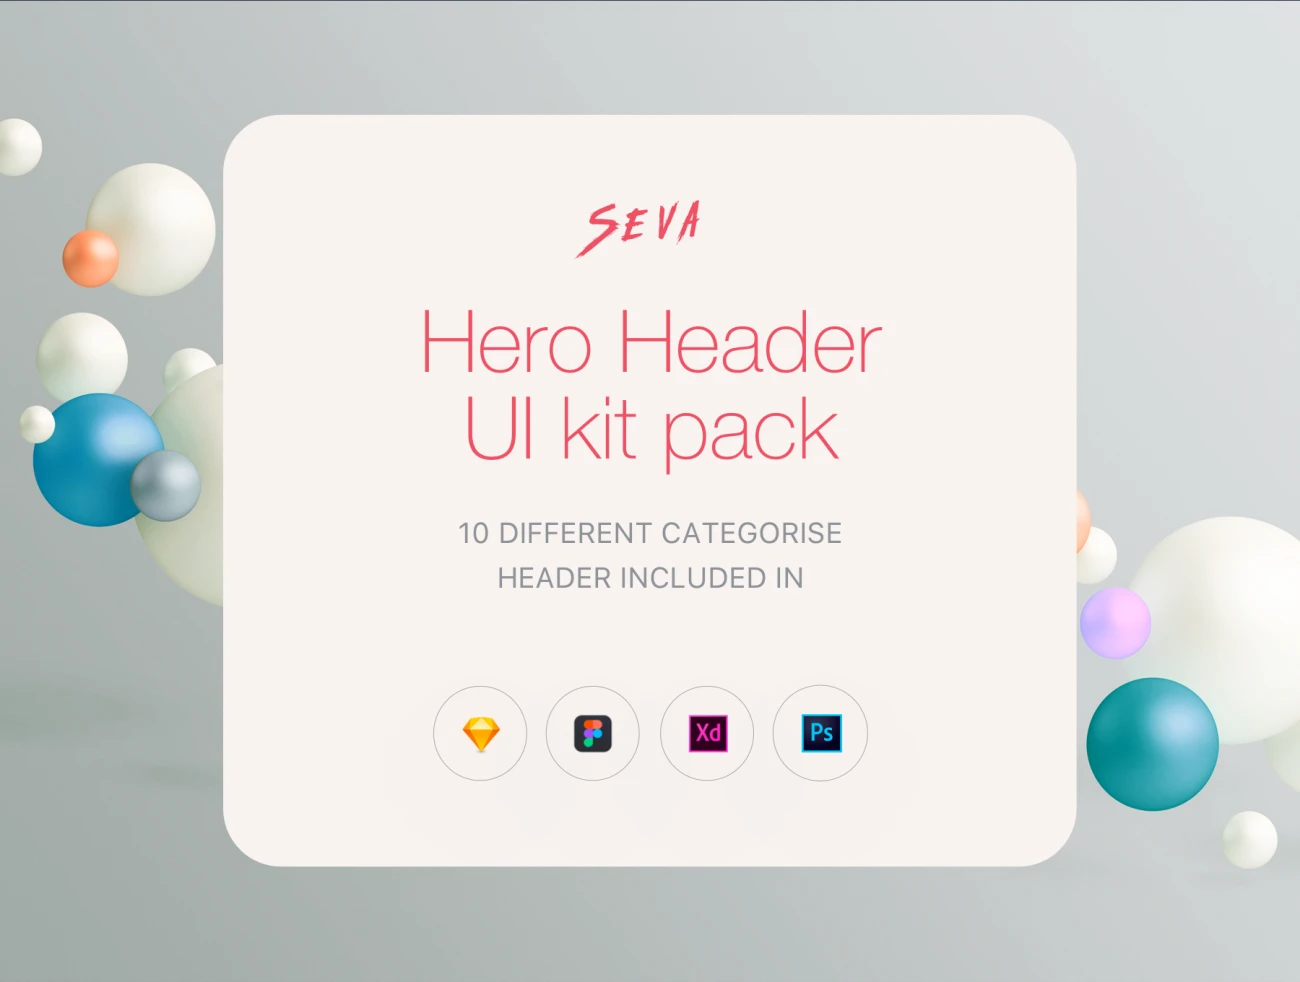 Seva header ui kit pack-2 潮流时尚创新版式首屏设计ui套件包-ui套件、主页、介绍、引导页、海报、着陆页-到位啦UI